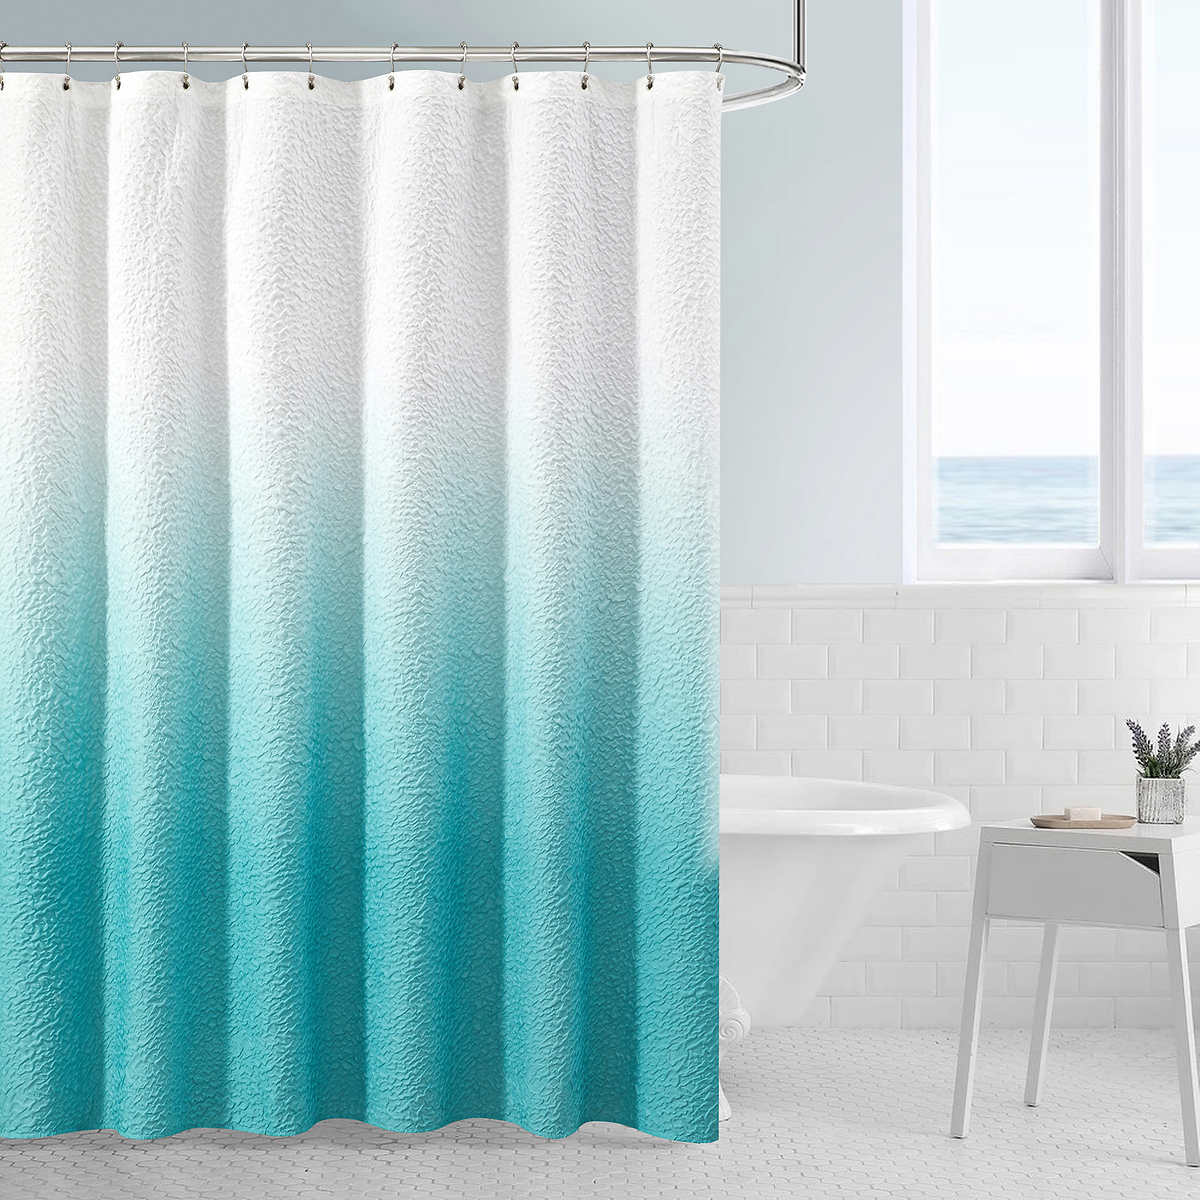 Sea Huge Shower Curtain Hook Selection Many Styles Colors Popular Bath Beach 